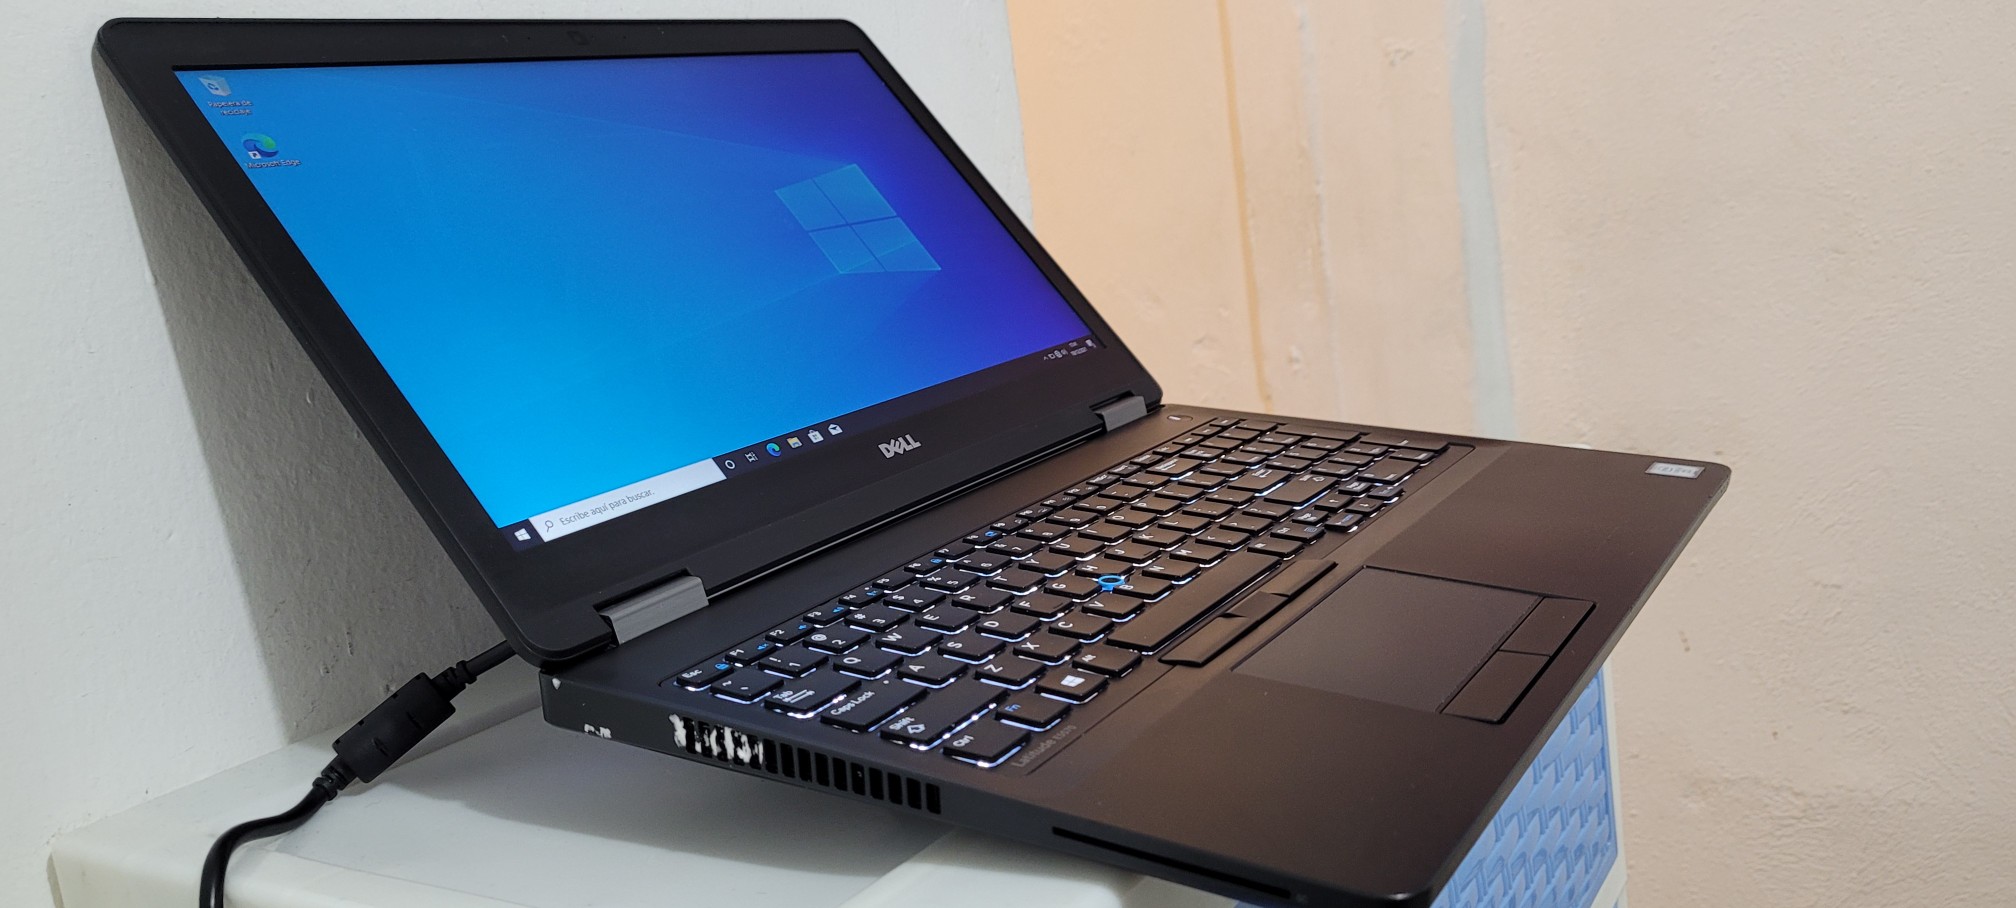 computadoras y laptops - Dell 5570 17 Core i7 6ta Gen Ram 16gb SSD 512GB Video intel Y Aty Radeon R7 2gb 1